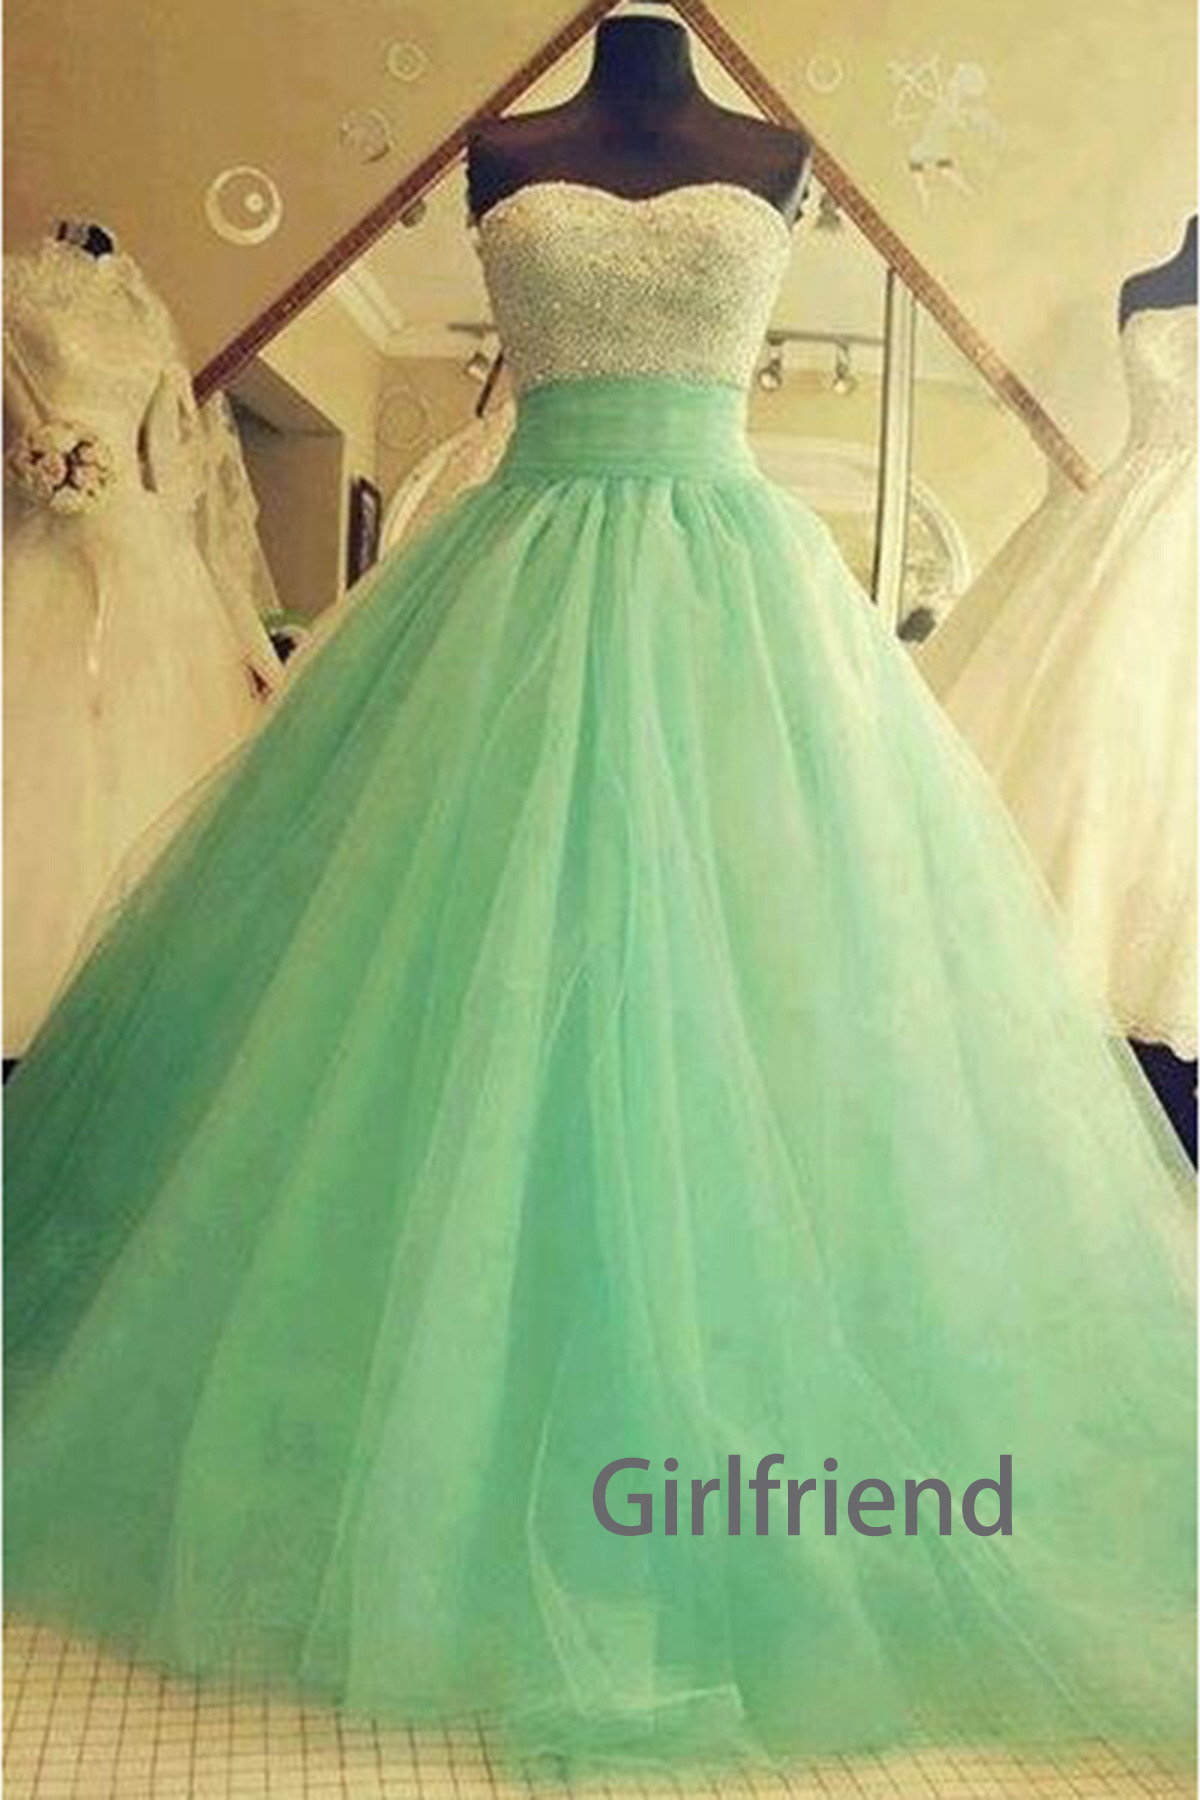 girlfriendpromdress:  http://girlfriend.storenvy.com/products/3690580-sweetheart-slim-tulle-floor-length-prom-dress-evening-dress